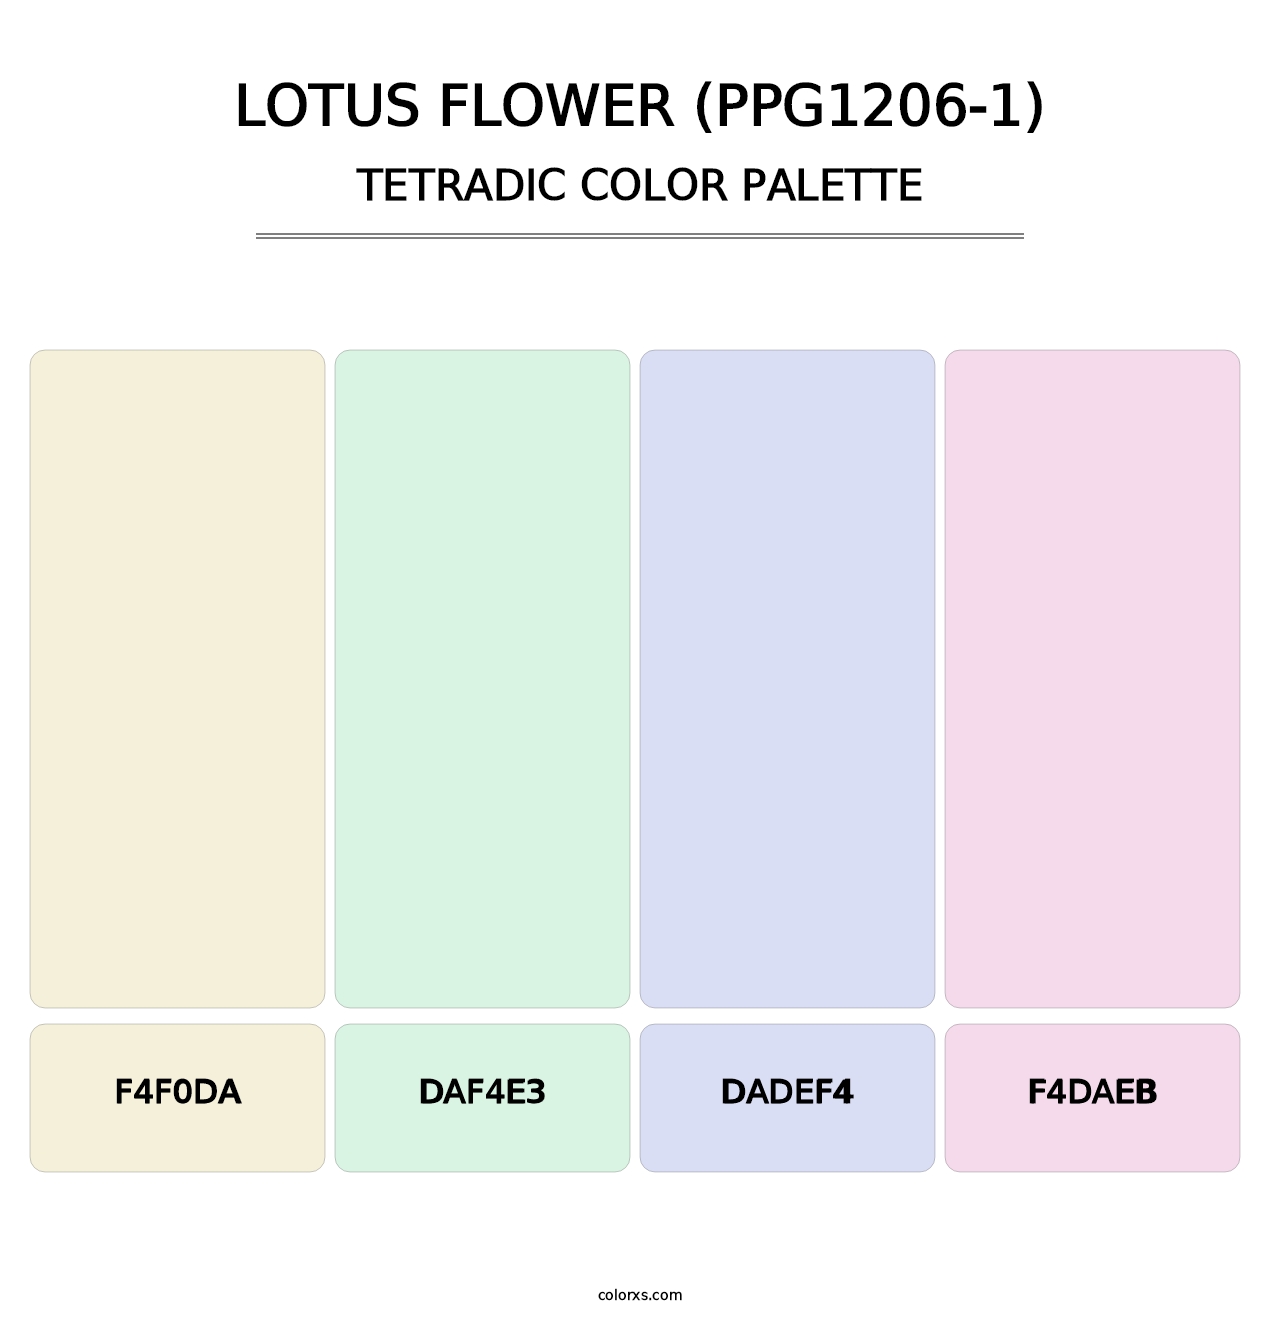 Lotus Flower (PPG1206-1) - Tetradic Color Palette